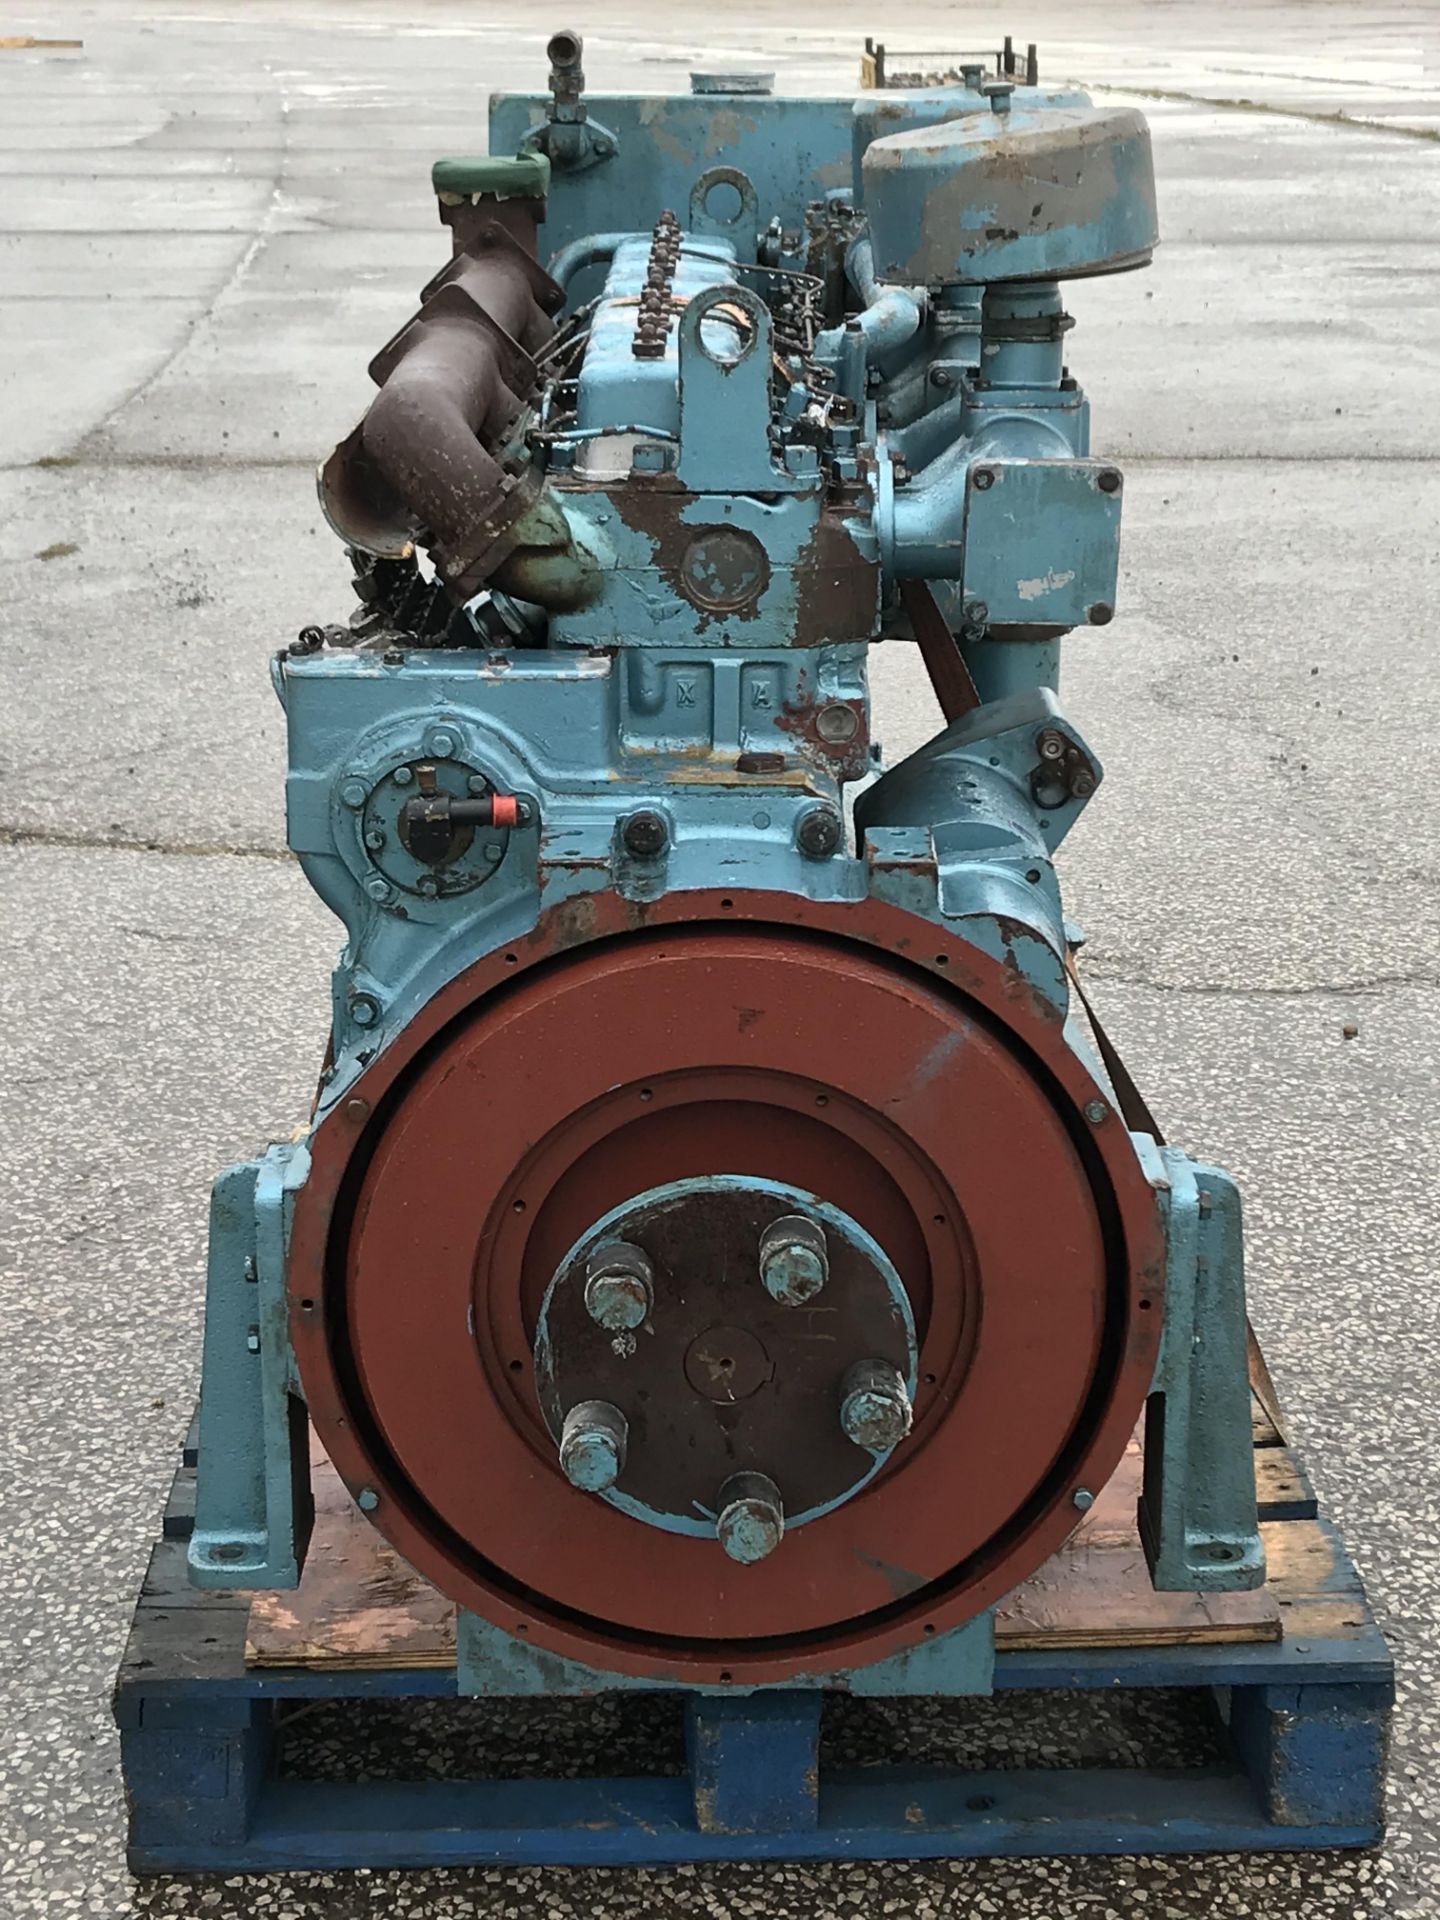 Dorman 6LE Diesel Engine Ex Standby - Image 5 of 6